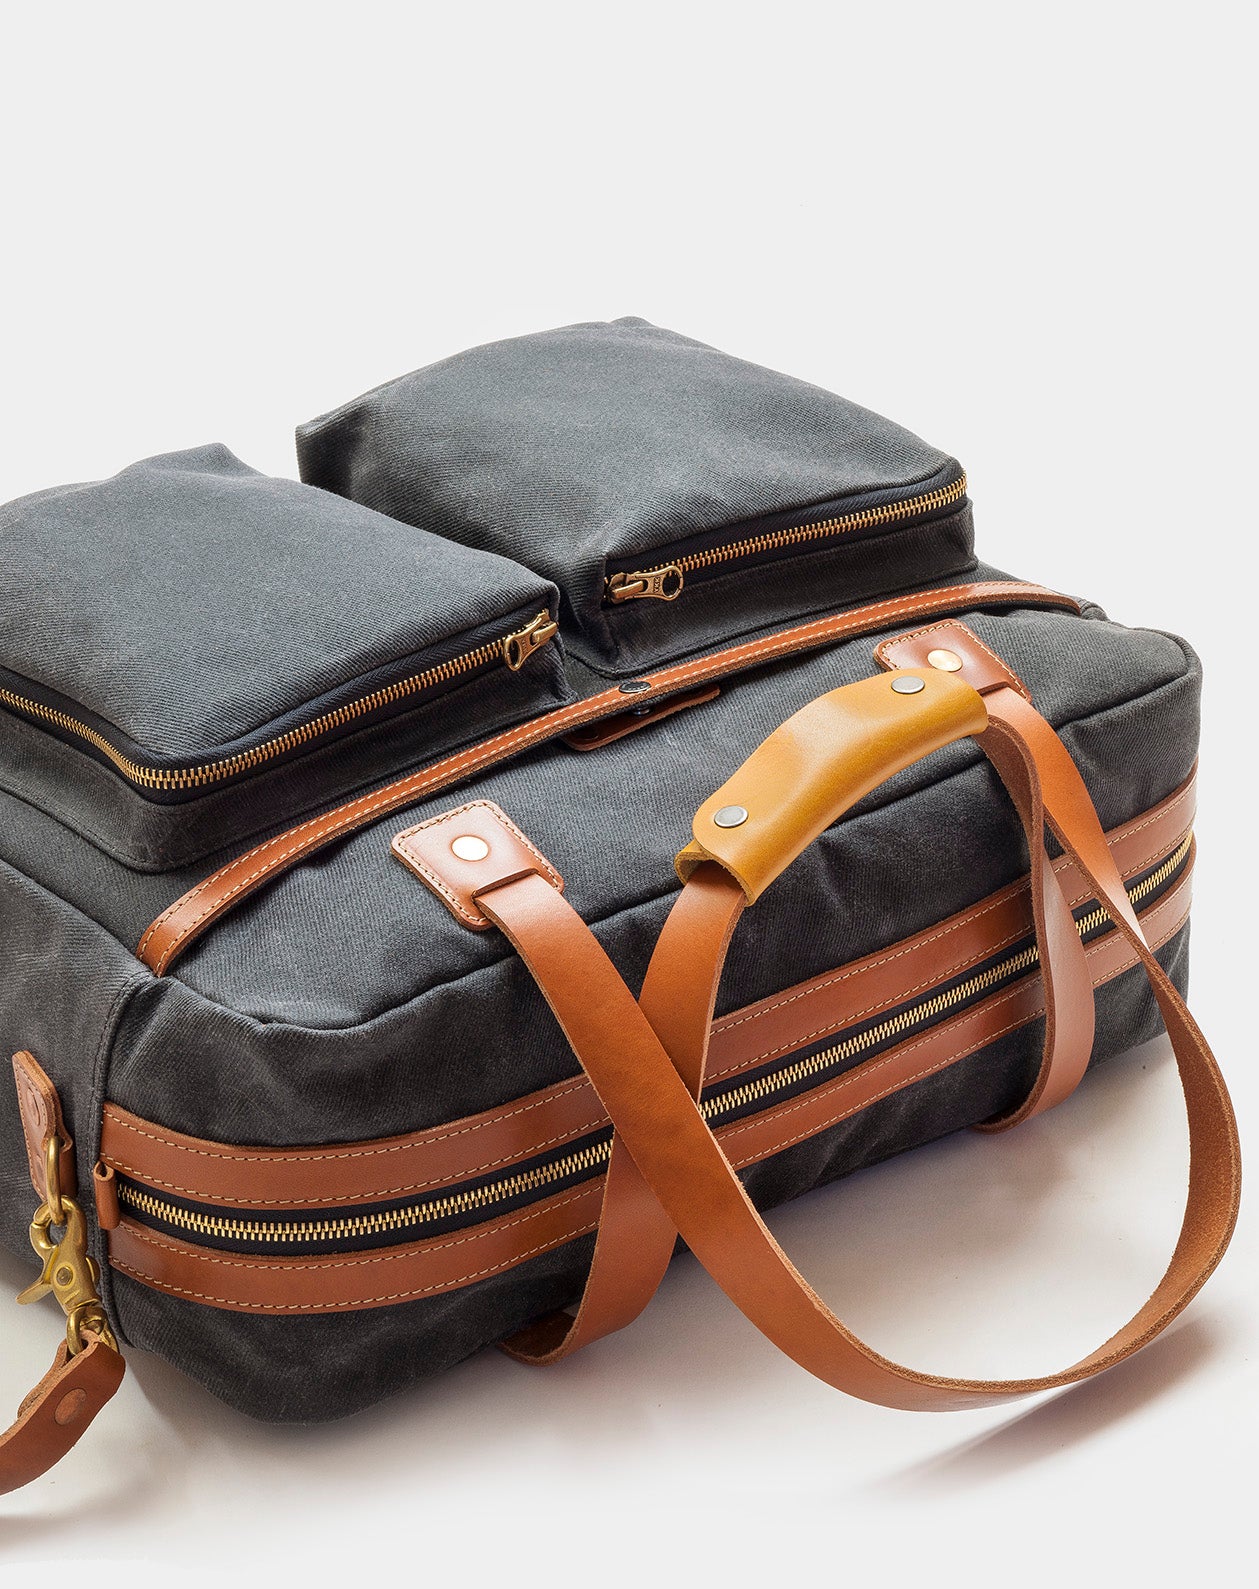 The 48H Travel Bag